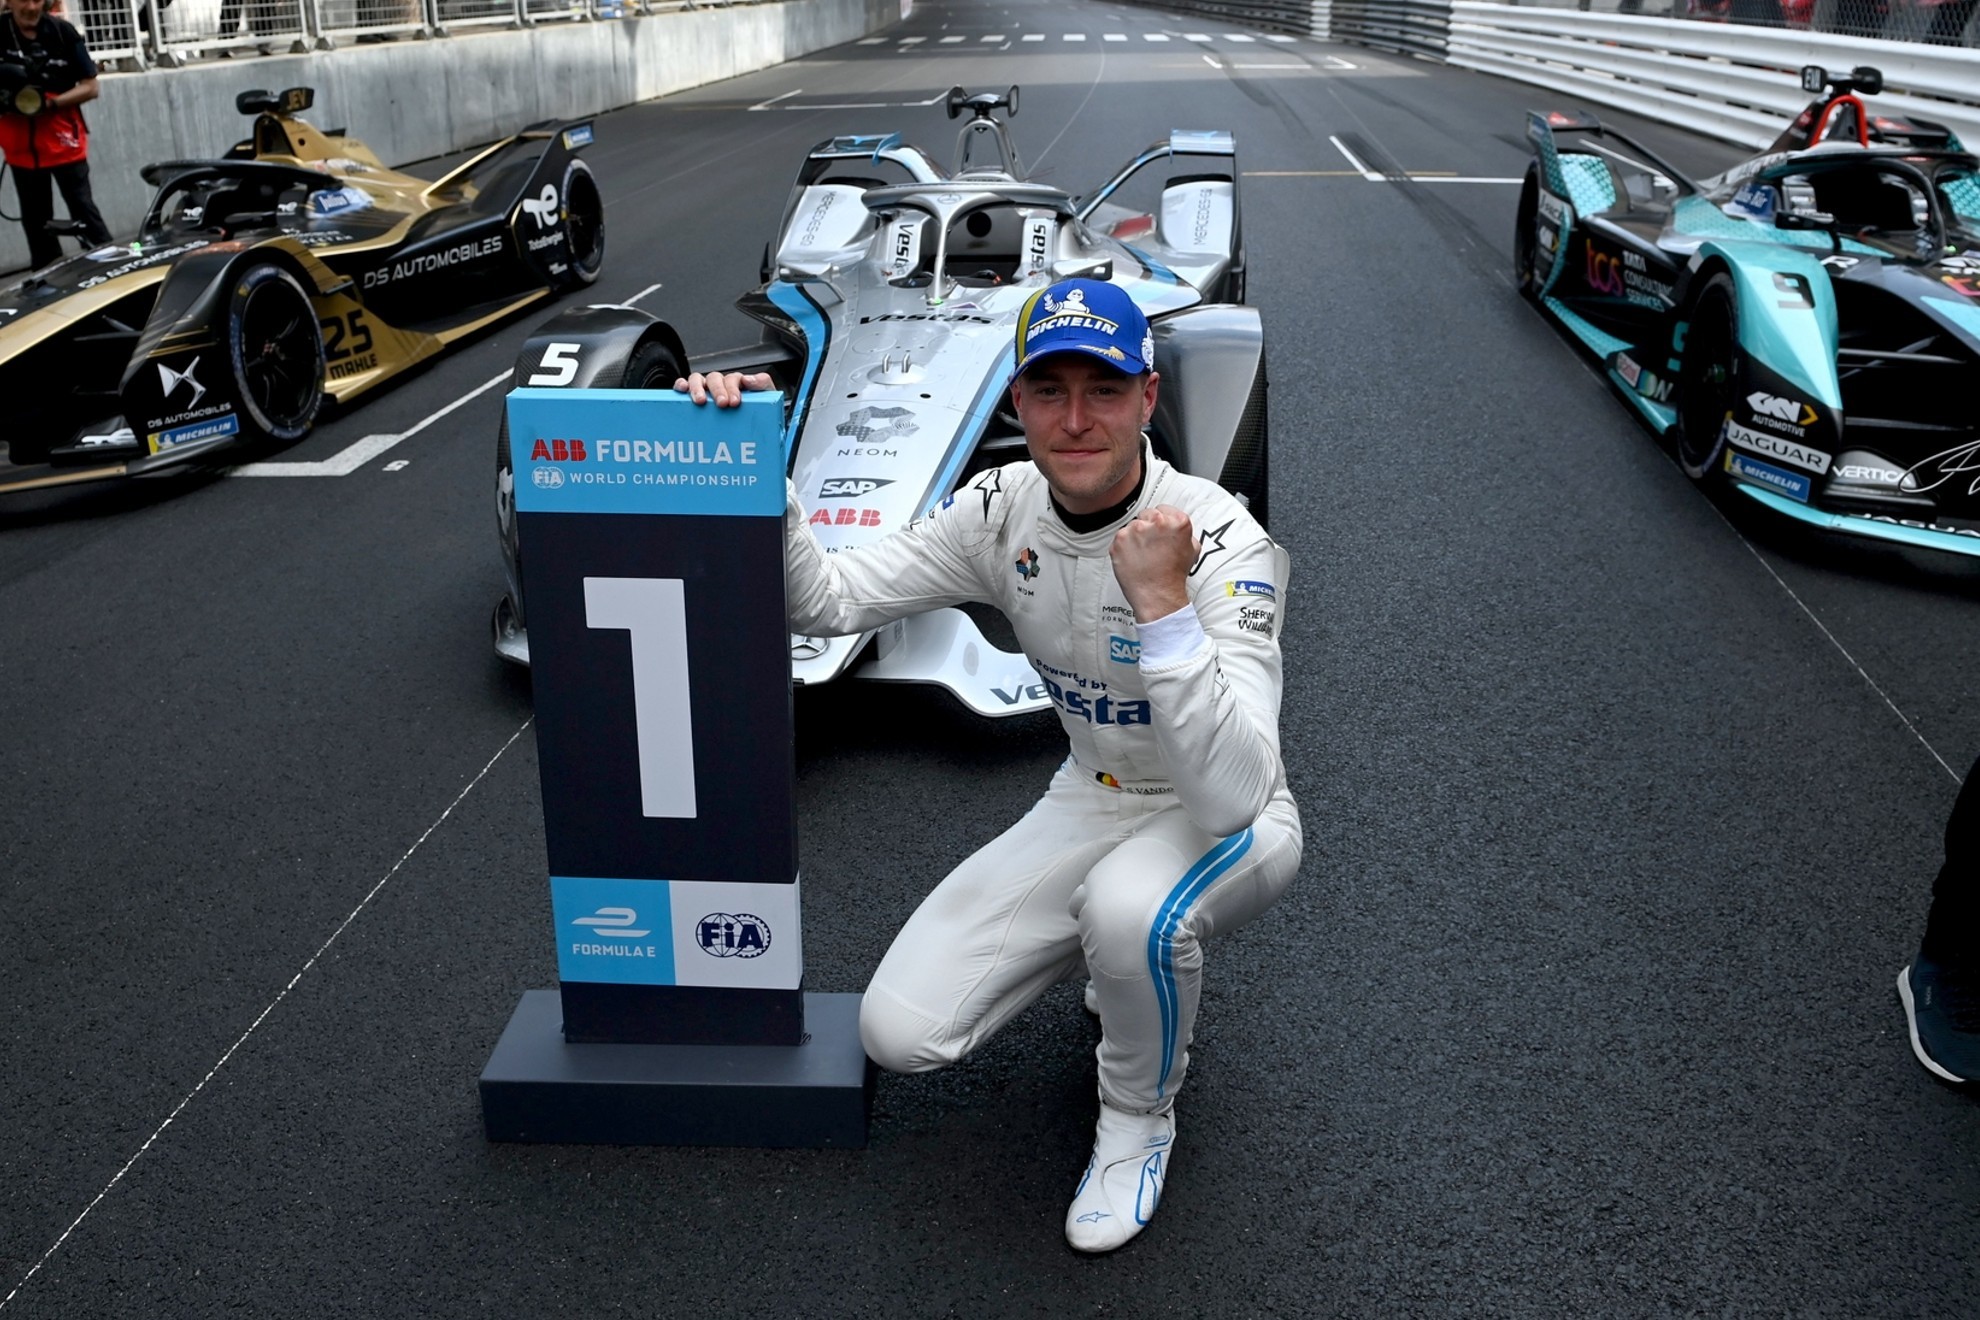 Stoffel Vandoorne - Formula E - Mercedes - previa - horarios - Seul E-Prix